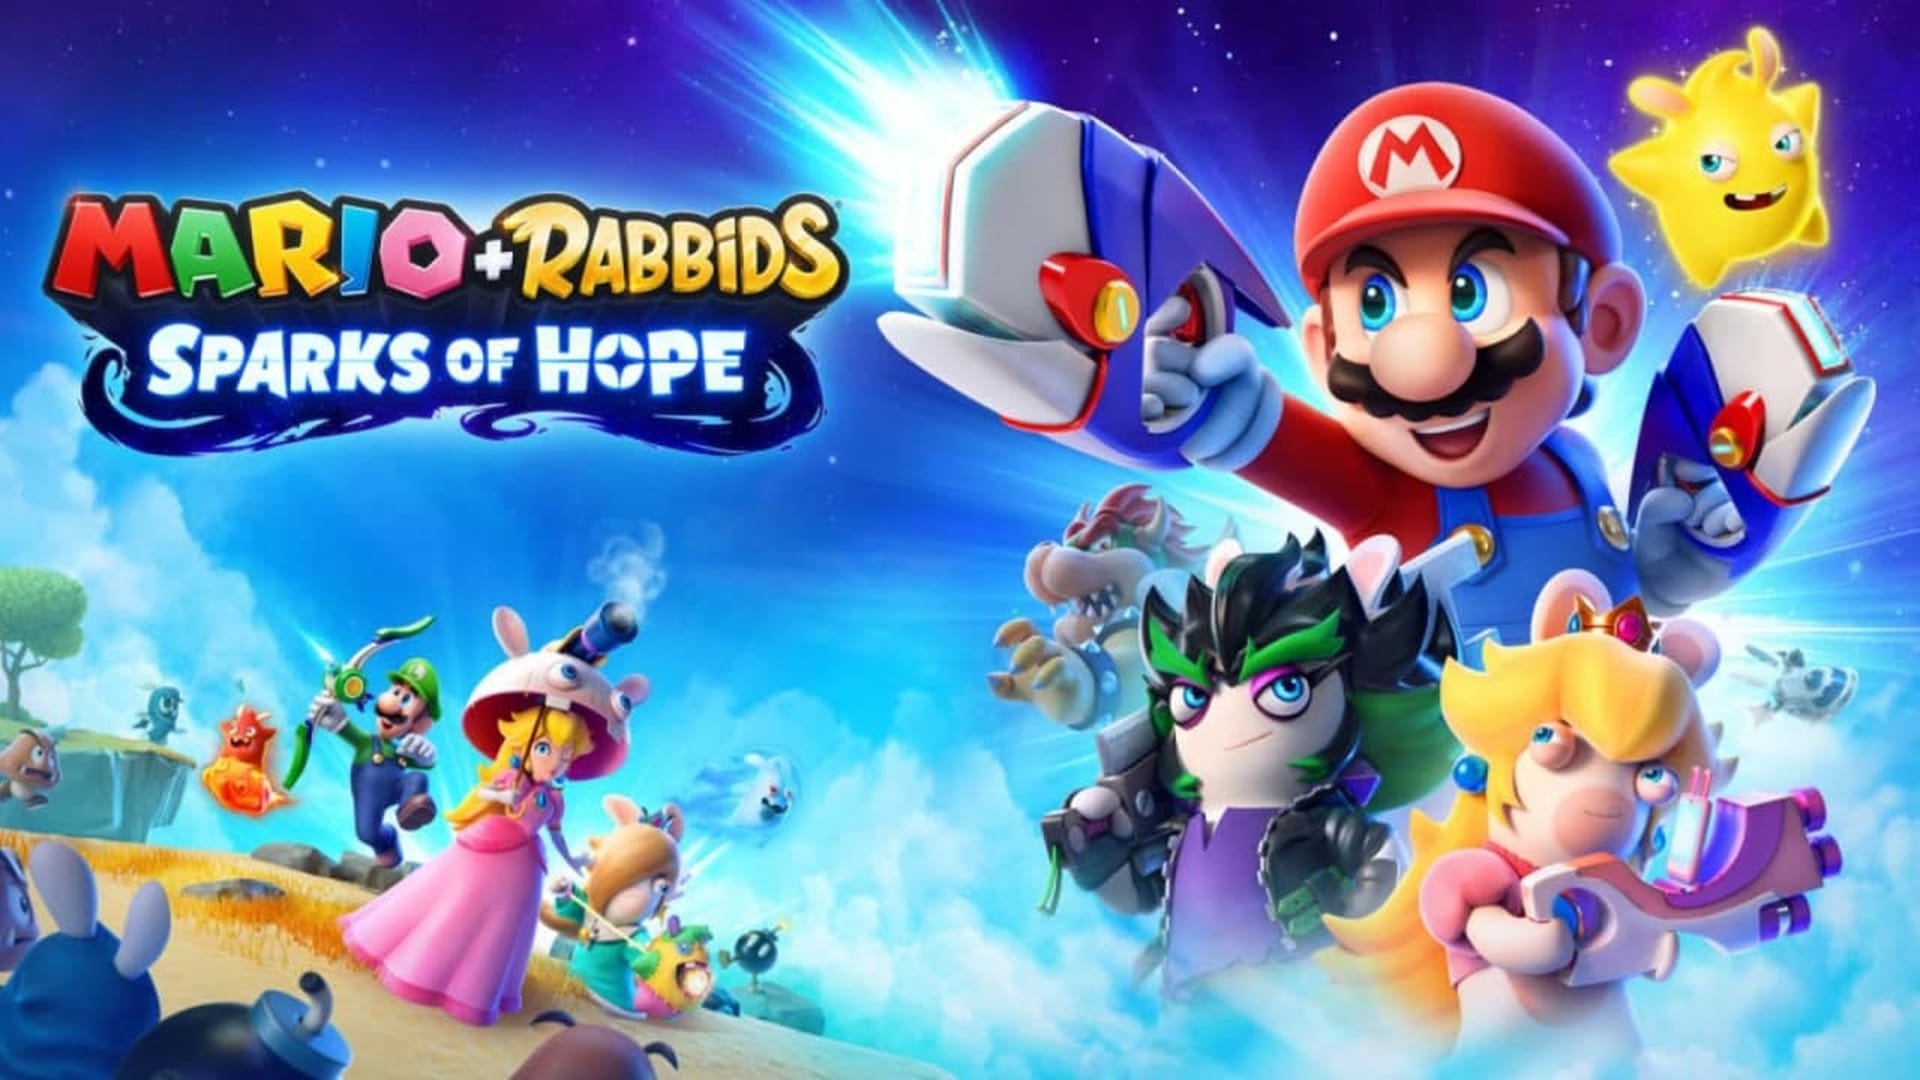 Mario + Rabbids Sparks of Hope podría retrasarse hasta 2023, según rumor, GamersRD